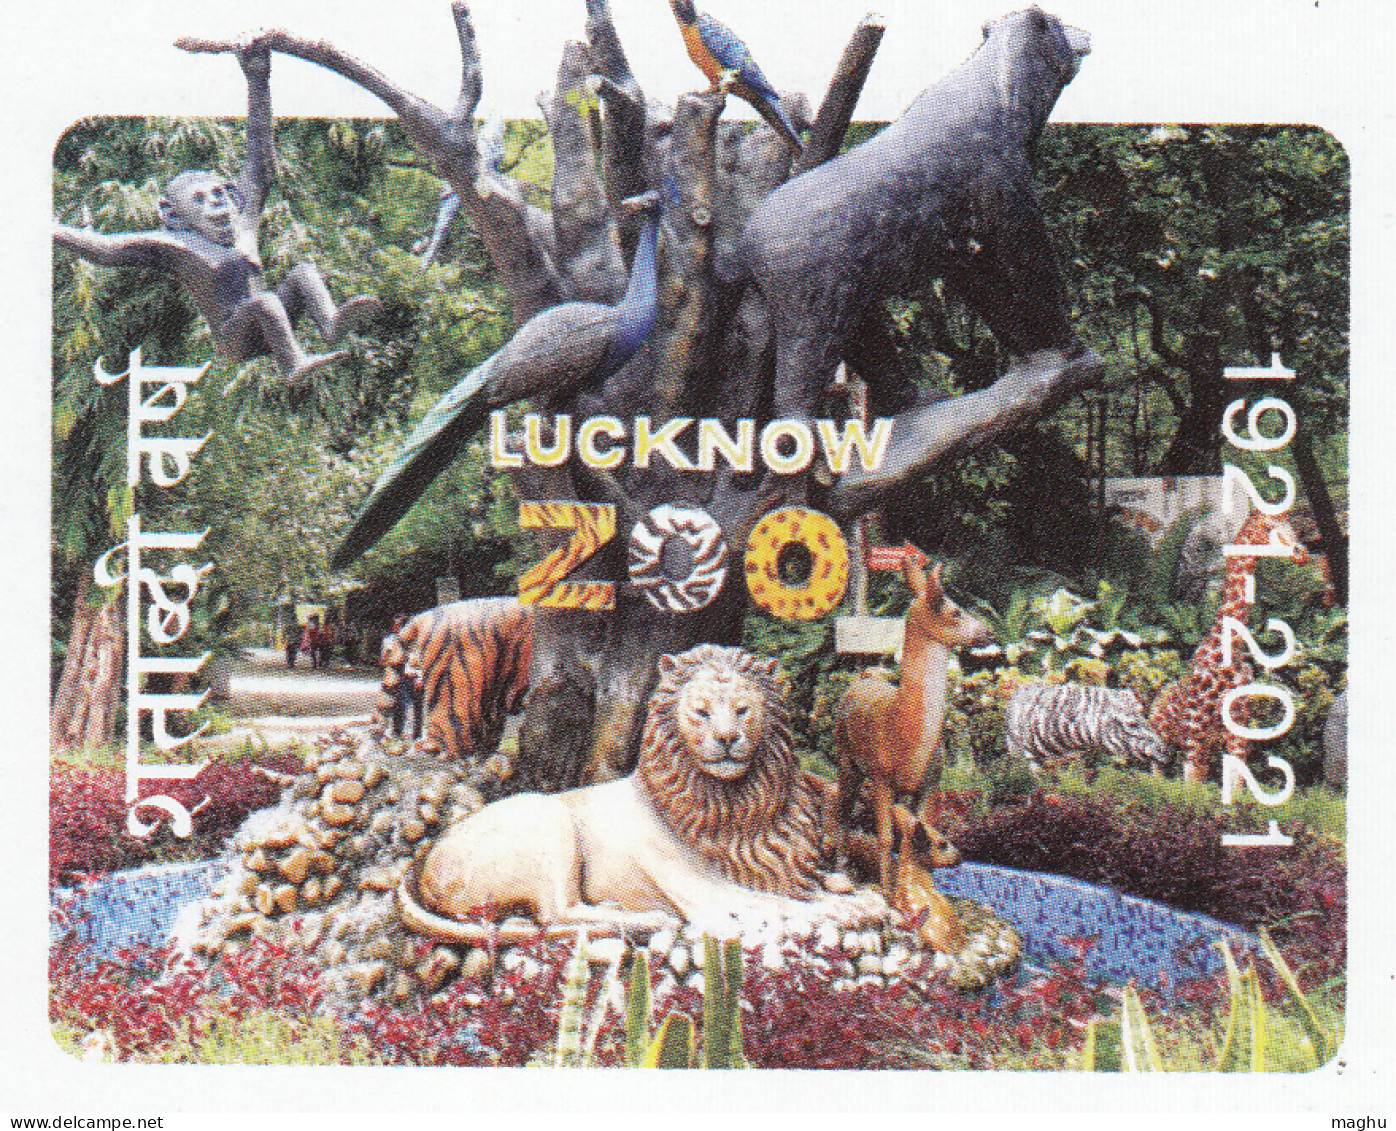 Tab + My Stamp 2021 MNH, Nawab...Zoological,  Zoo, Animal, Lion, Tiger, Deer, Giraffe, Chimpanzee, Peacock, Bird, Zebra - Usados